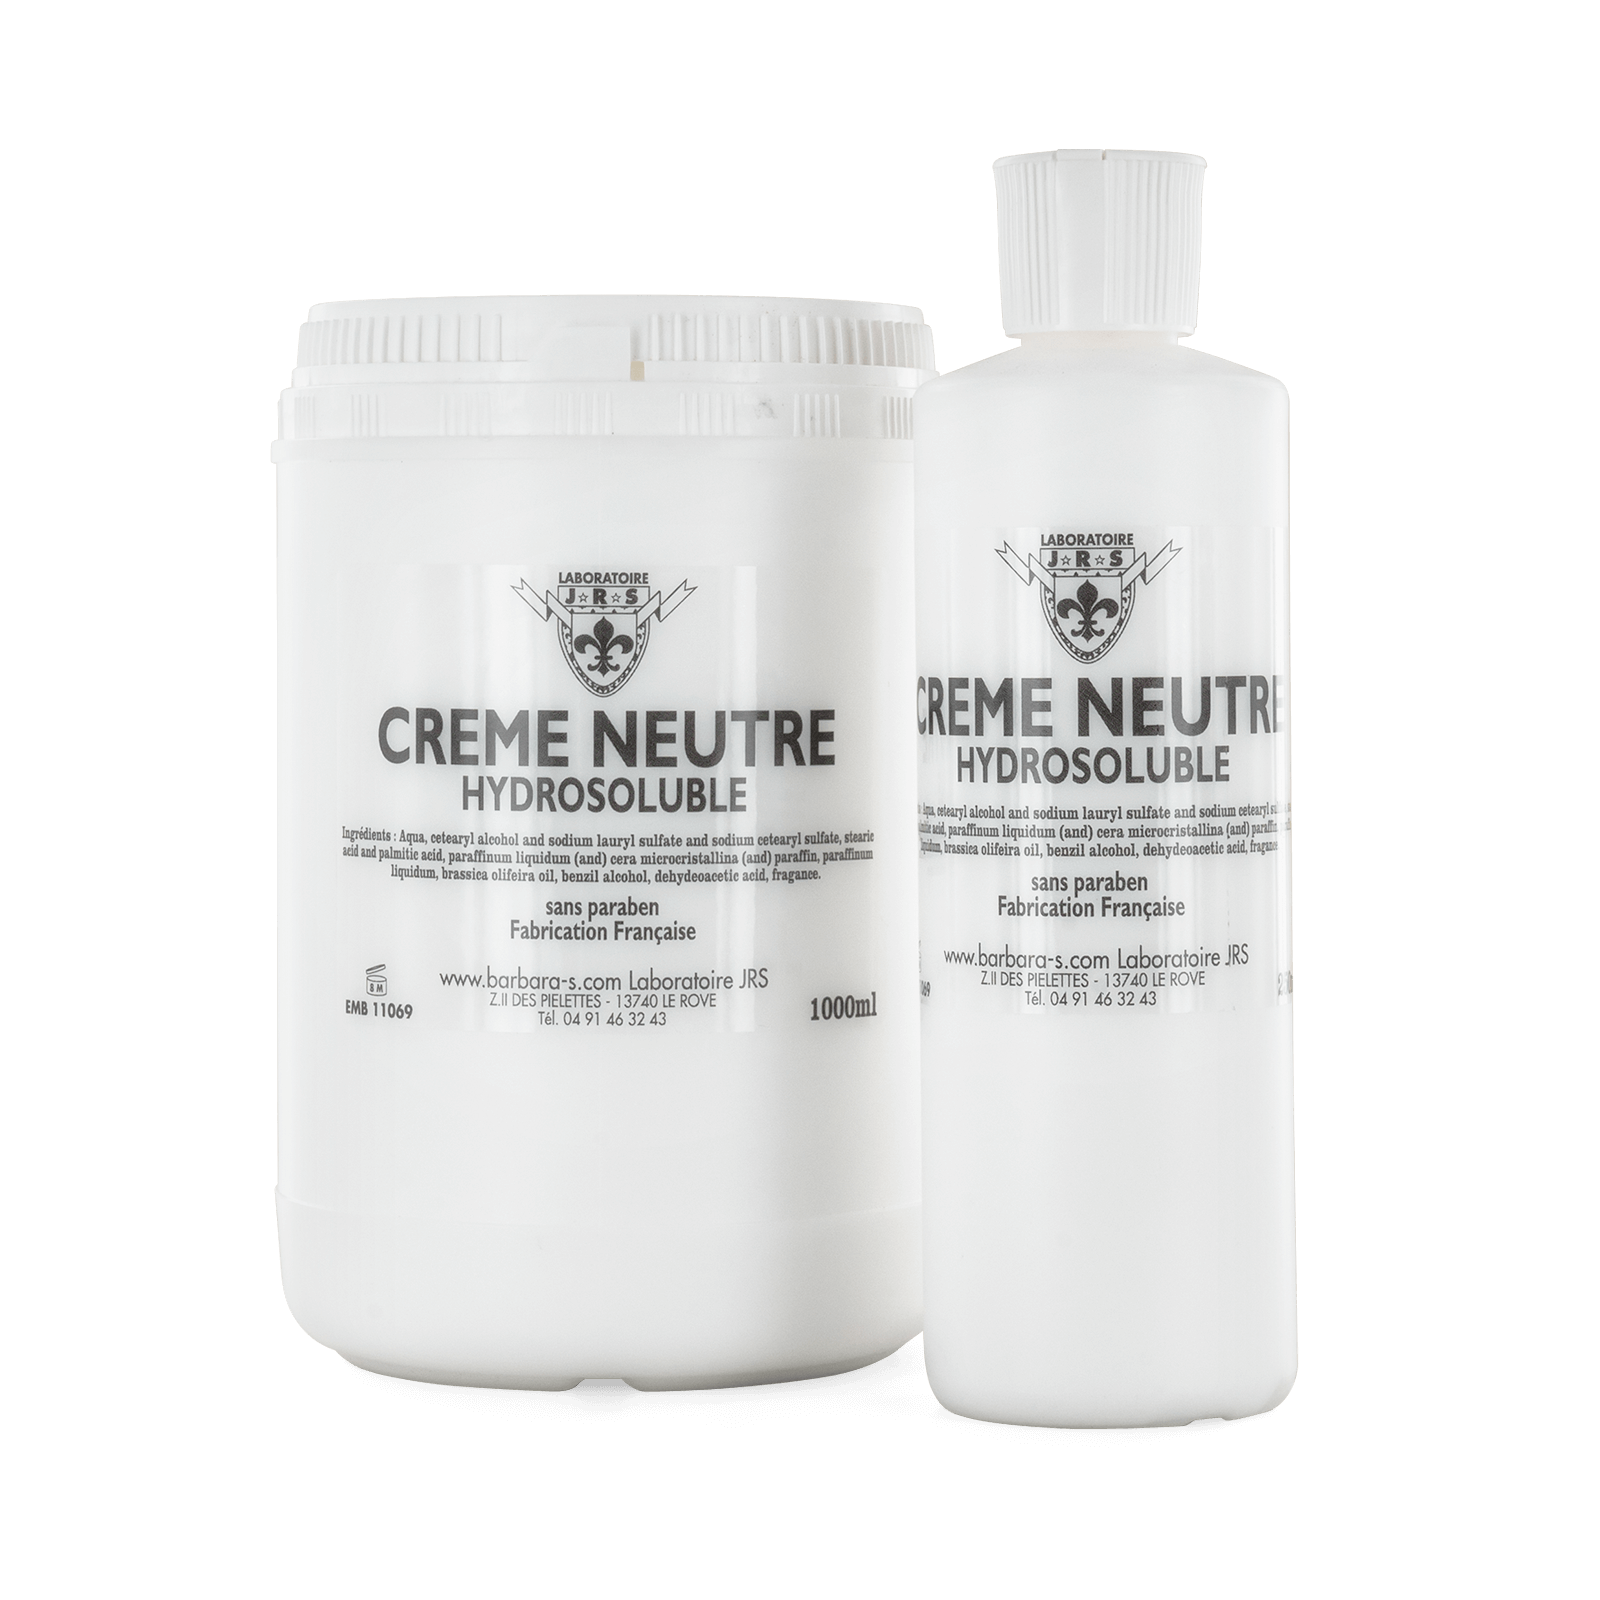 Crème neutre Hydrosoluble